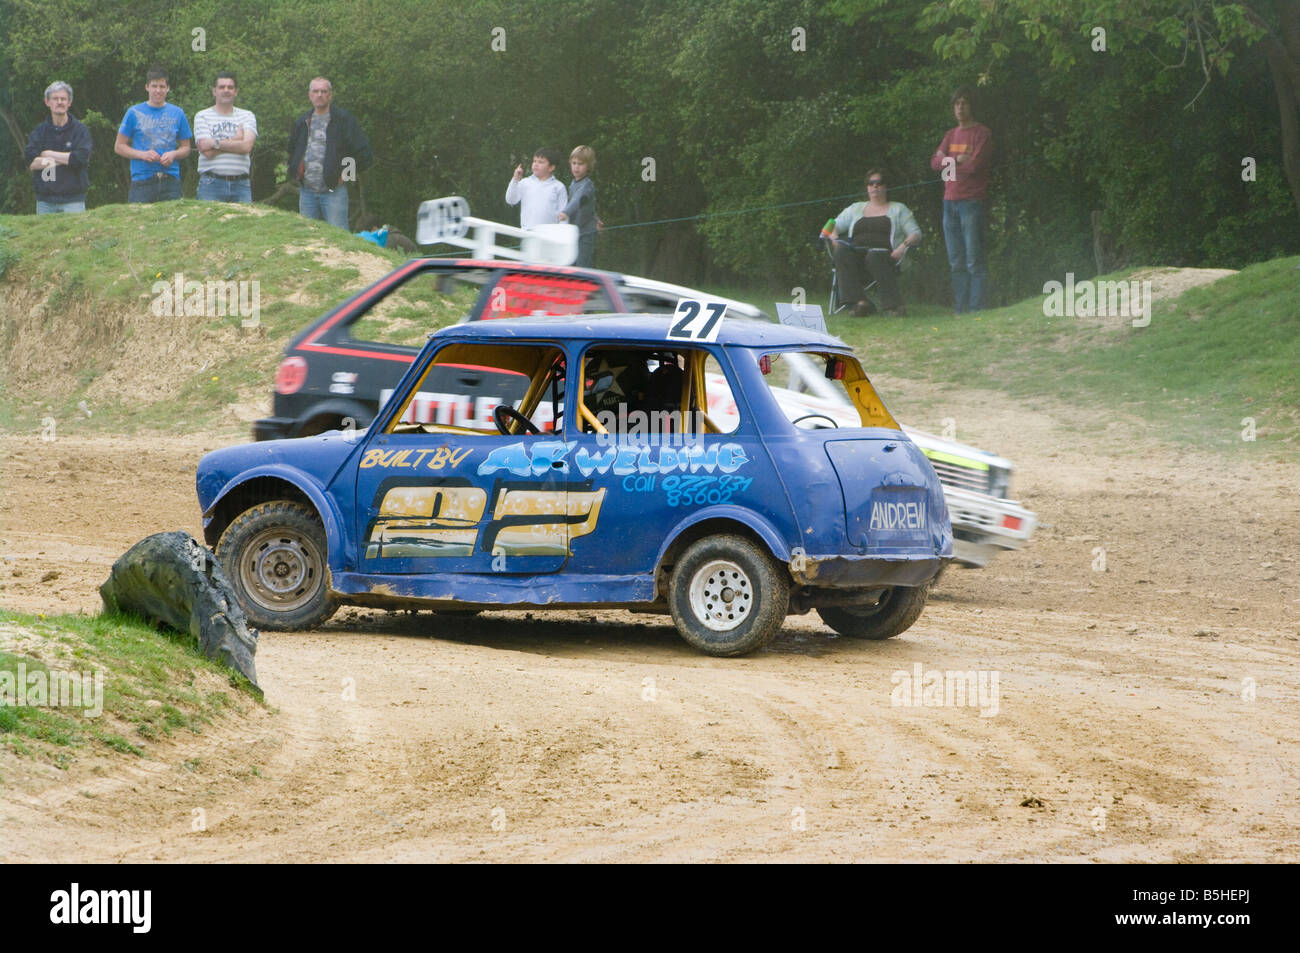 Banger Racing Mini Stock Cars Race Smallfield Raceway Surrey Stock Photo: 20668442 - Alamy